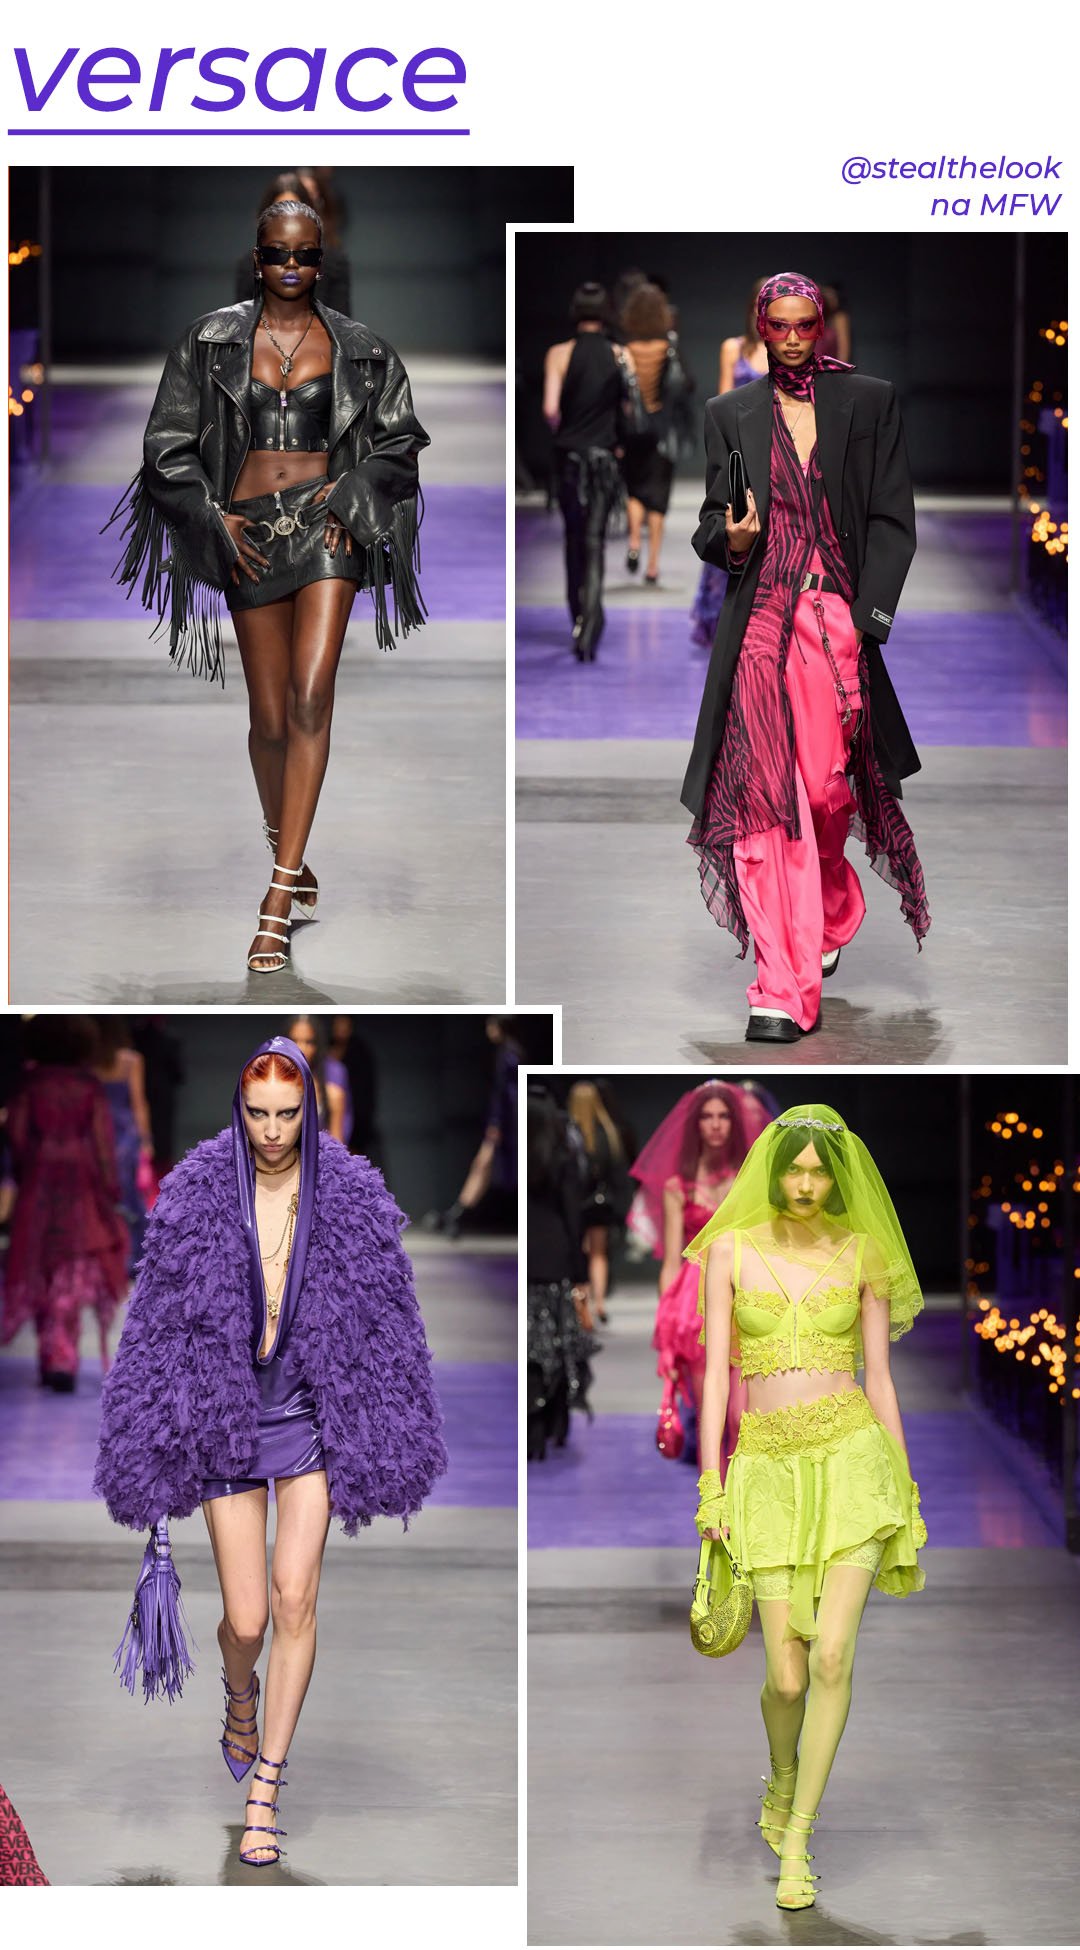 Versace S/S 2023 - roupas diversas - Milano Fashion Week - Primavera - modelo andando pela passarela - https://stealthelook.com.br